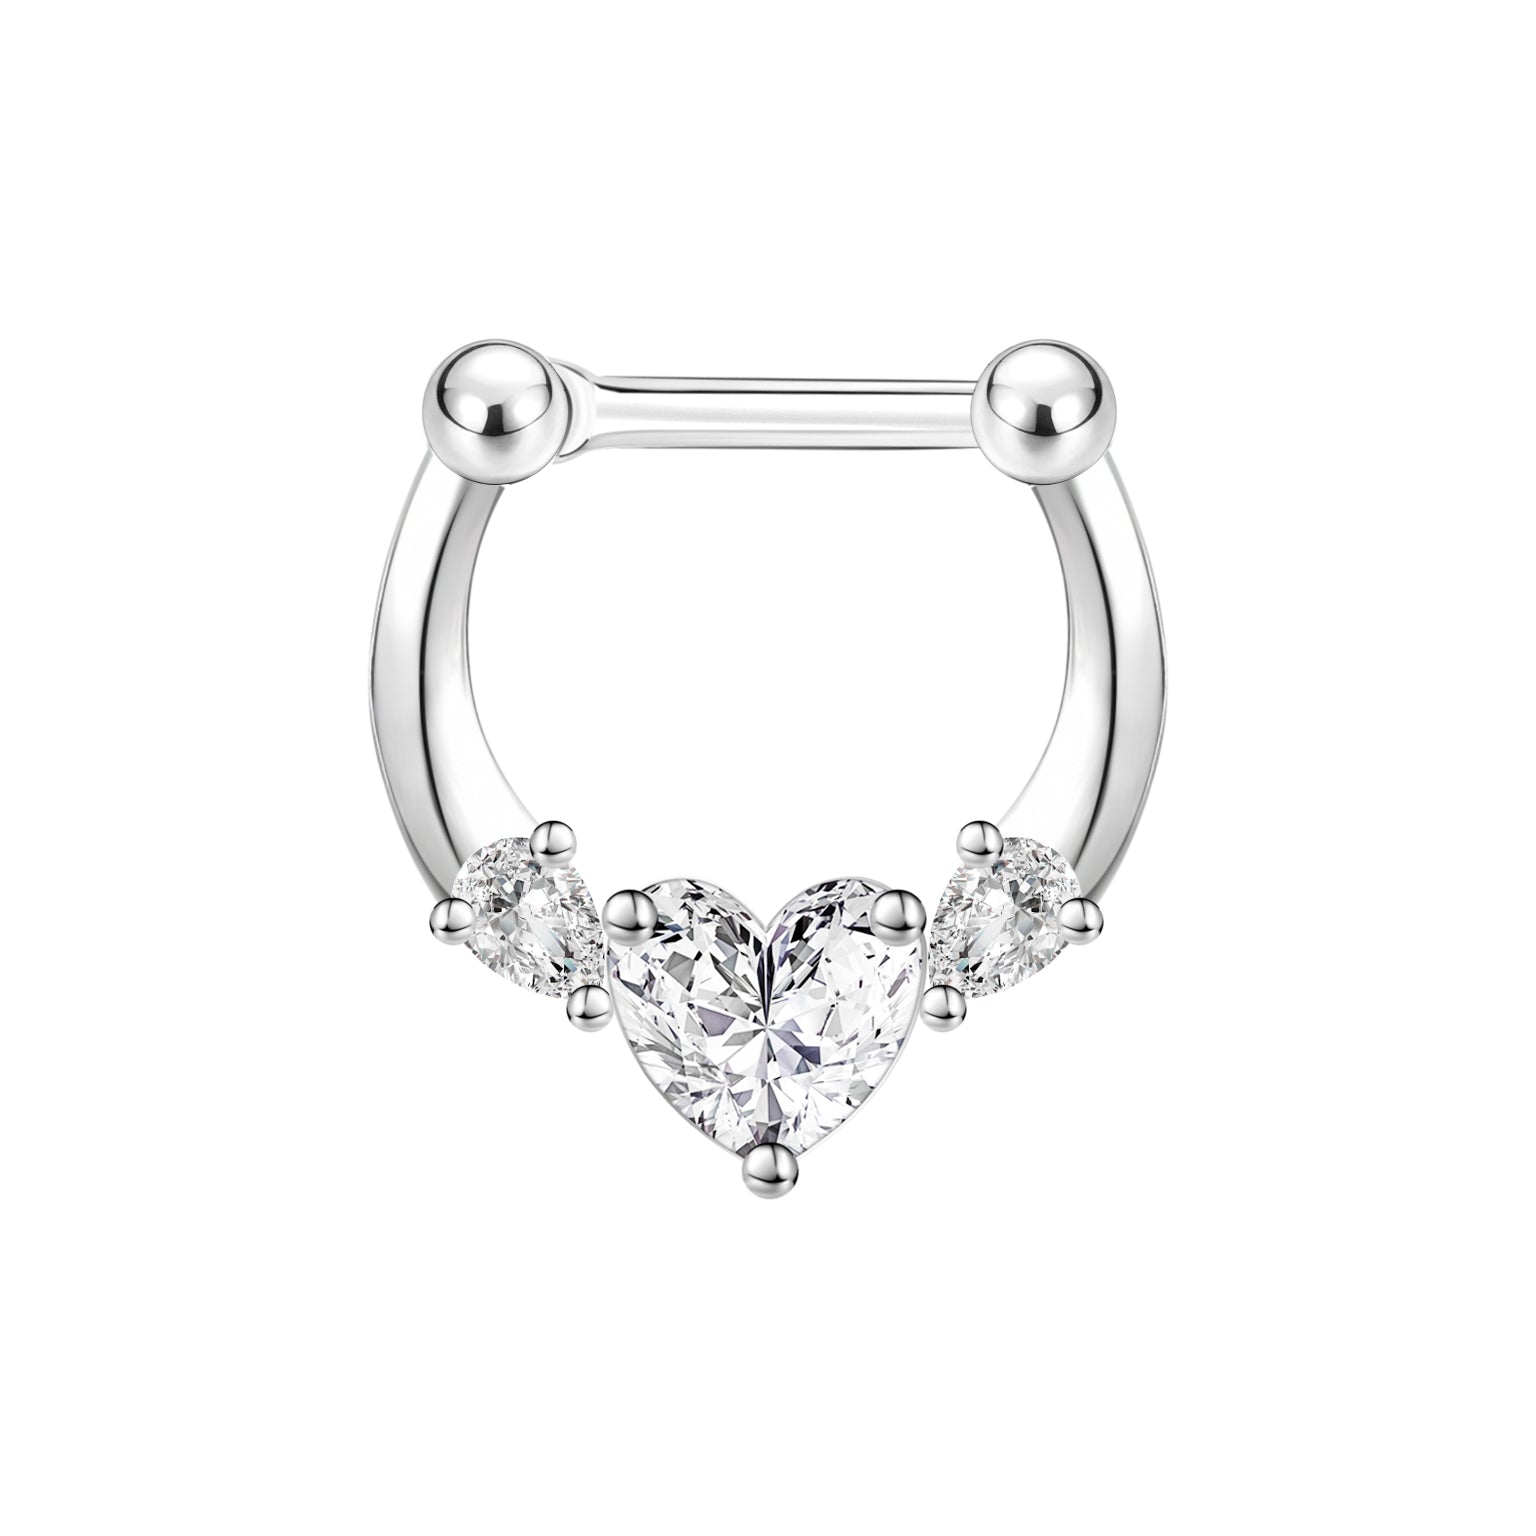 20g-heart-crystal-nose-septum-clicker-ring-gold-sliver-color-stainless-steel-helix-cartilage-piercing